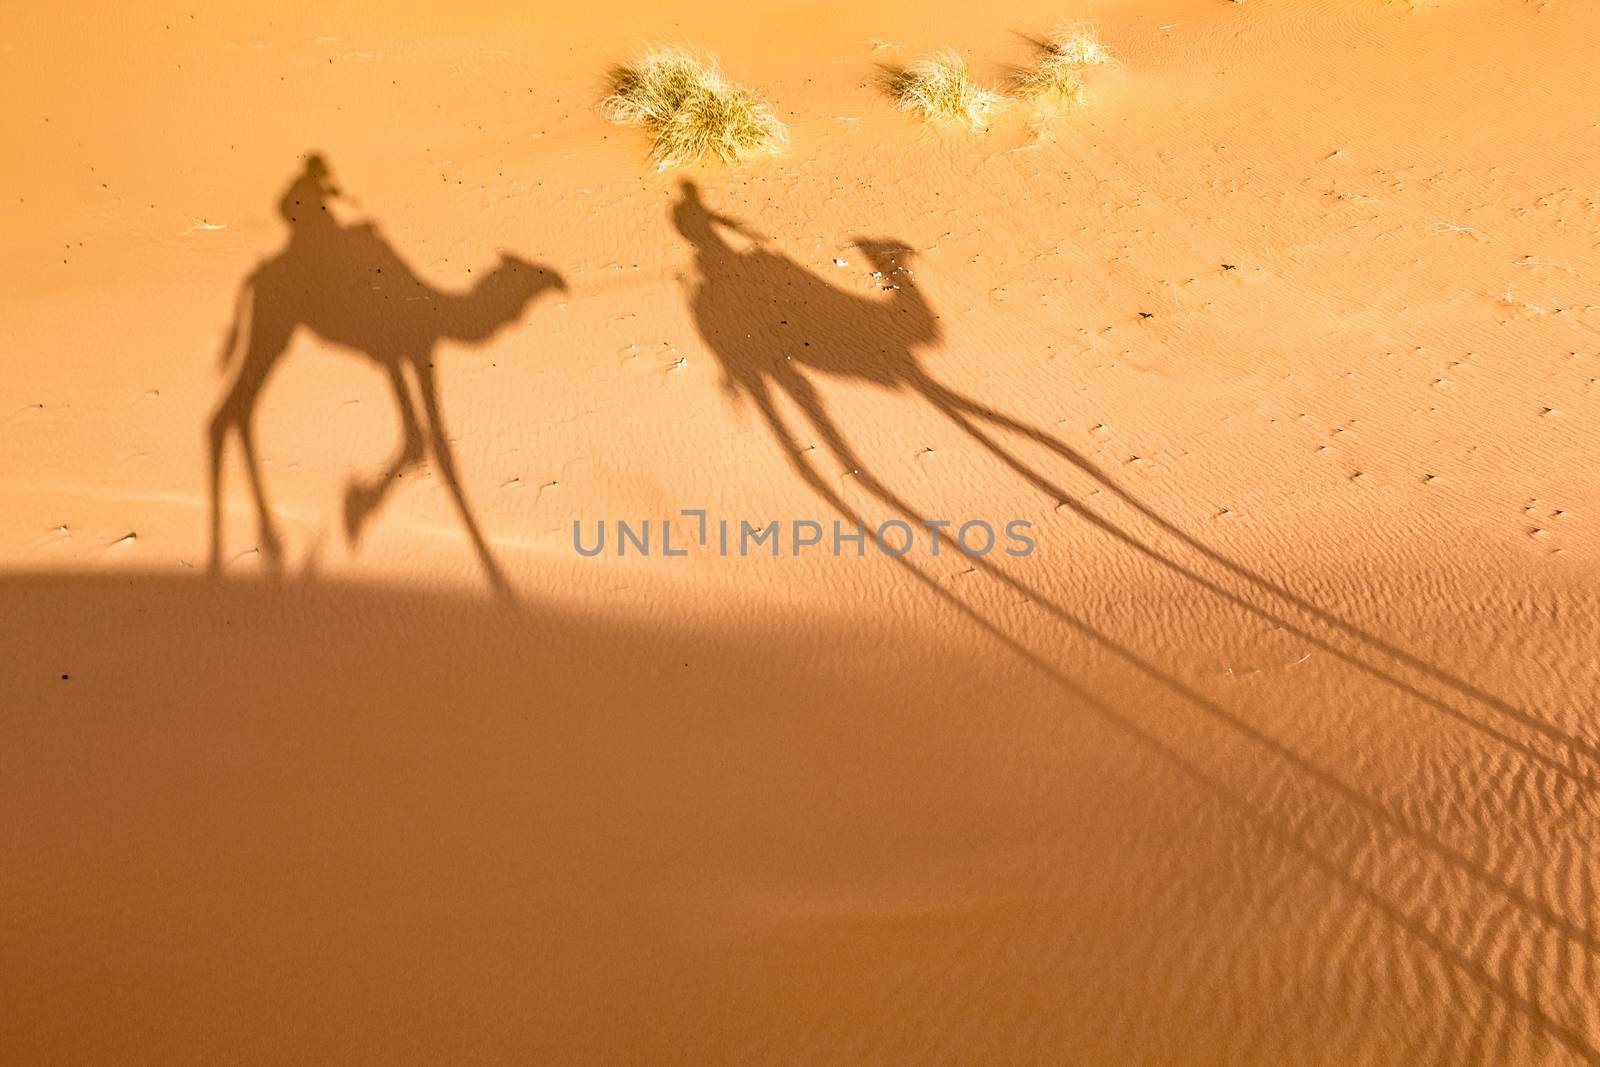 Merzouga in the Sahara Desert in Morocco by SeuMelhorClick